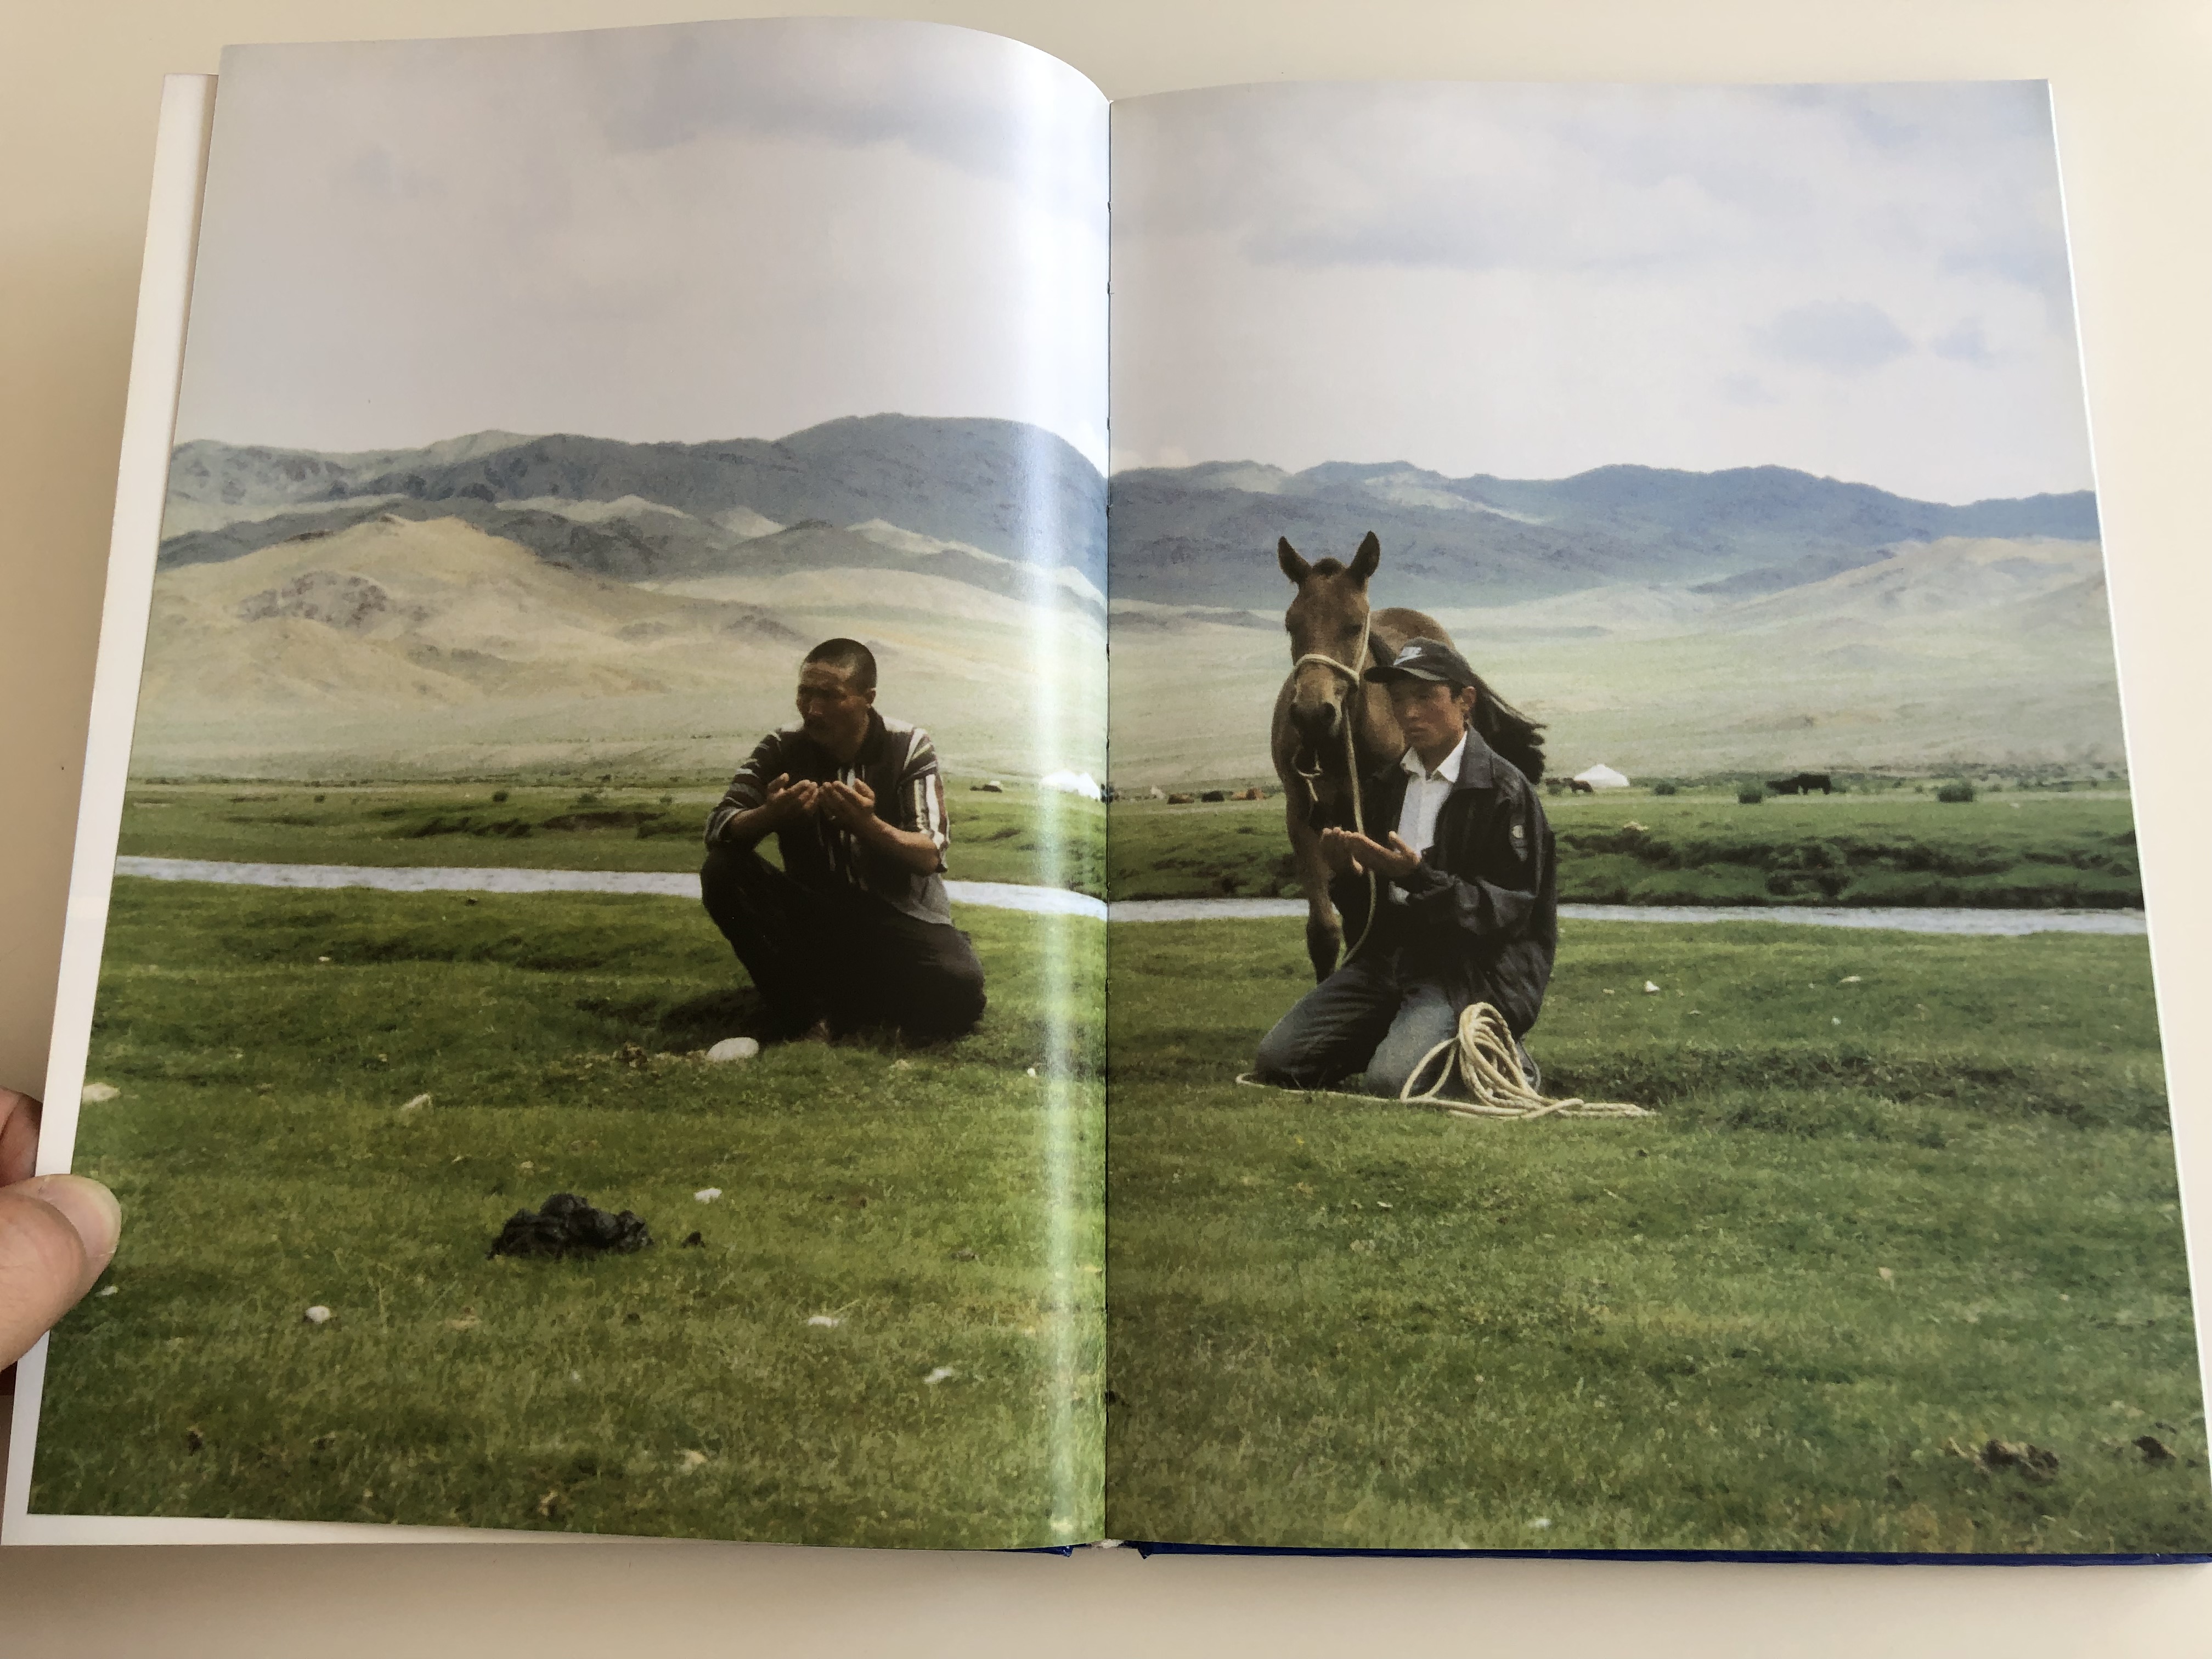 julianus-nyomdokain-zsi-ban-by-benk-mih-ly-f-nyk-pez-g-pes-barangol-sok-mong-li-ban-photographical-journey-through-mongolia-timp-kiad-2001-9-.jpg